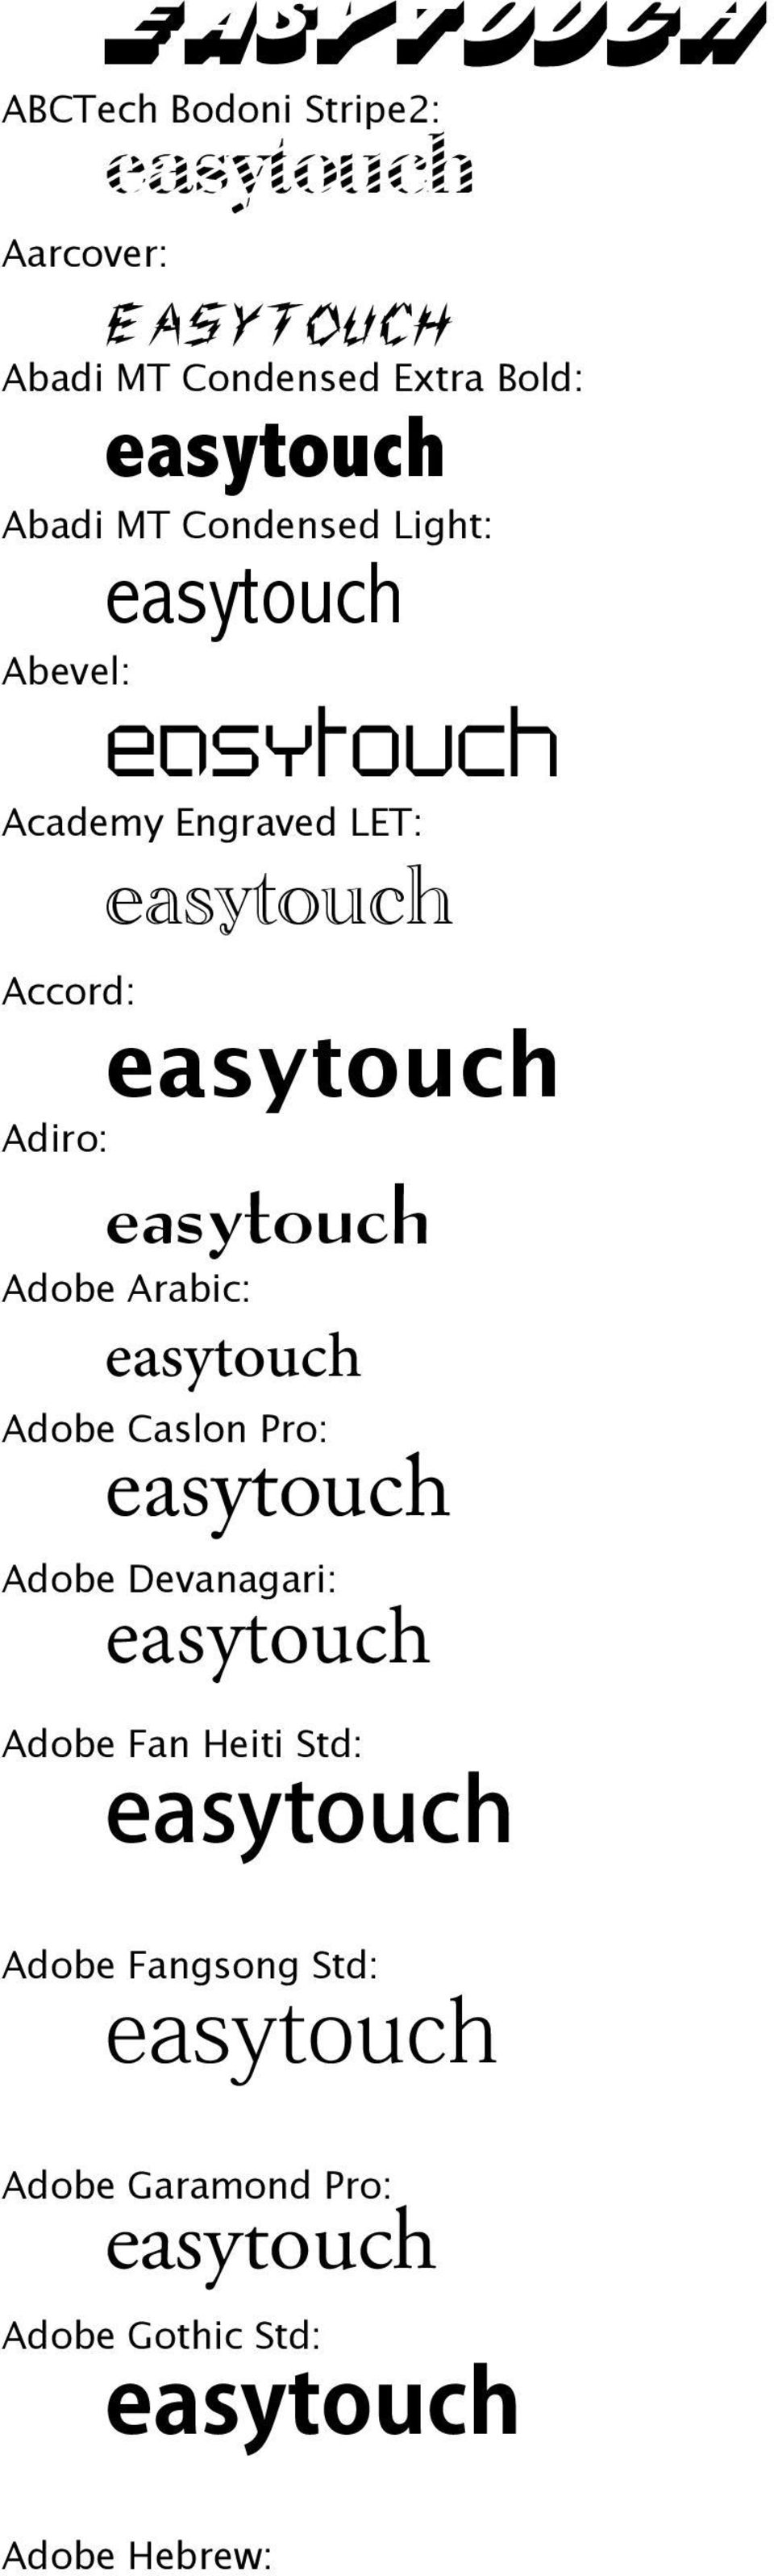 Adiro: Adobe Arabic: Adobe Caslon Pro: Adobe Devanagari: Adobe Fan